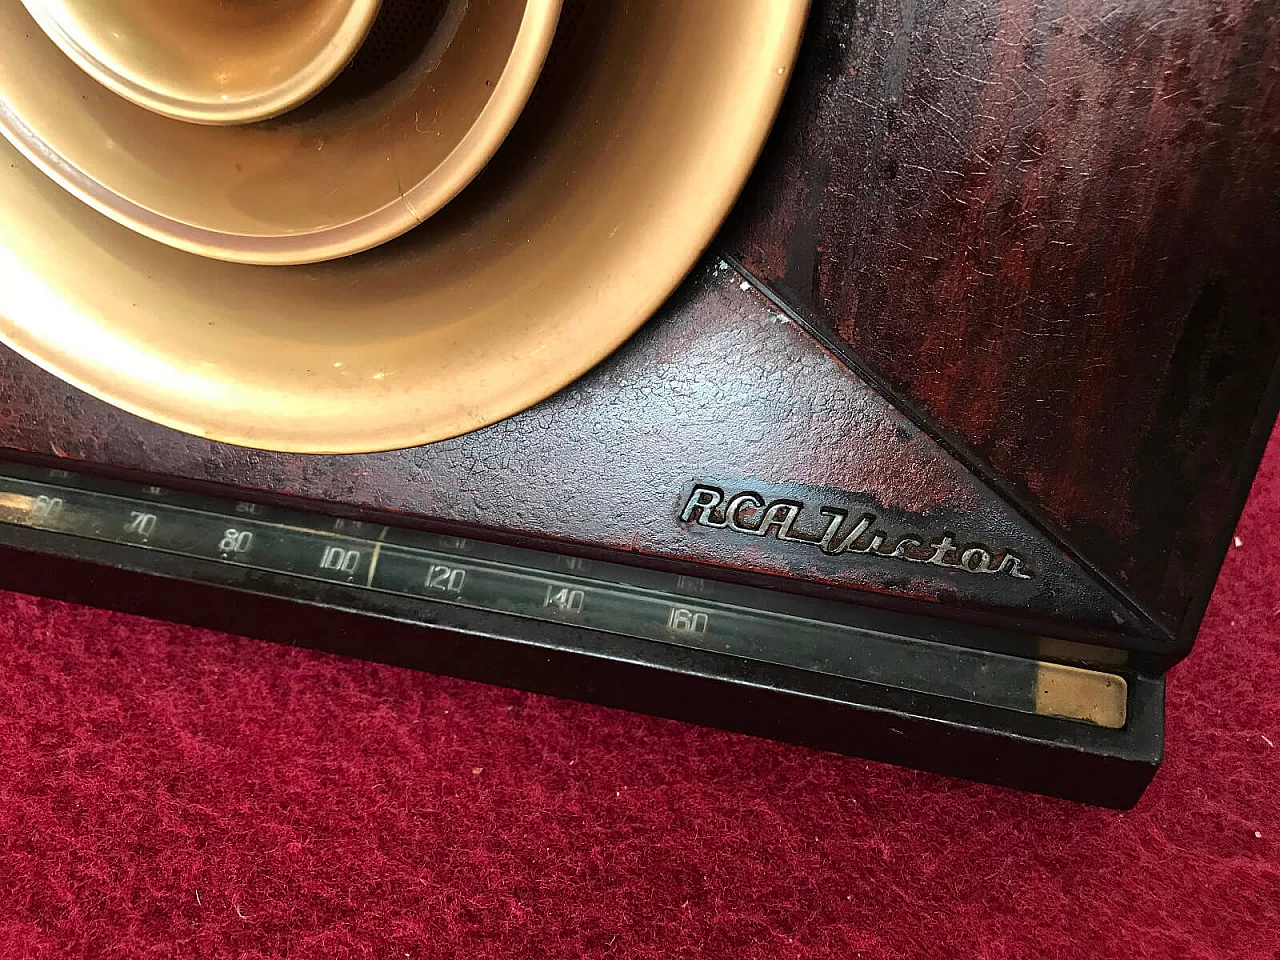 American radio model "9-X-571 Golden Throat", RCA Victor 5